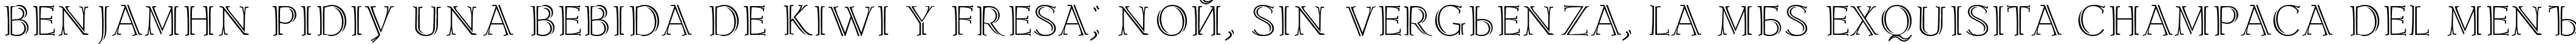 Пример написания шрифтом Lidia Medium текста на испанском